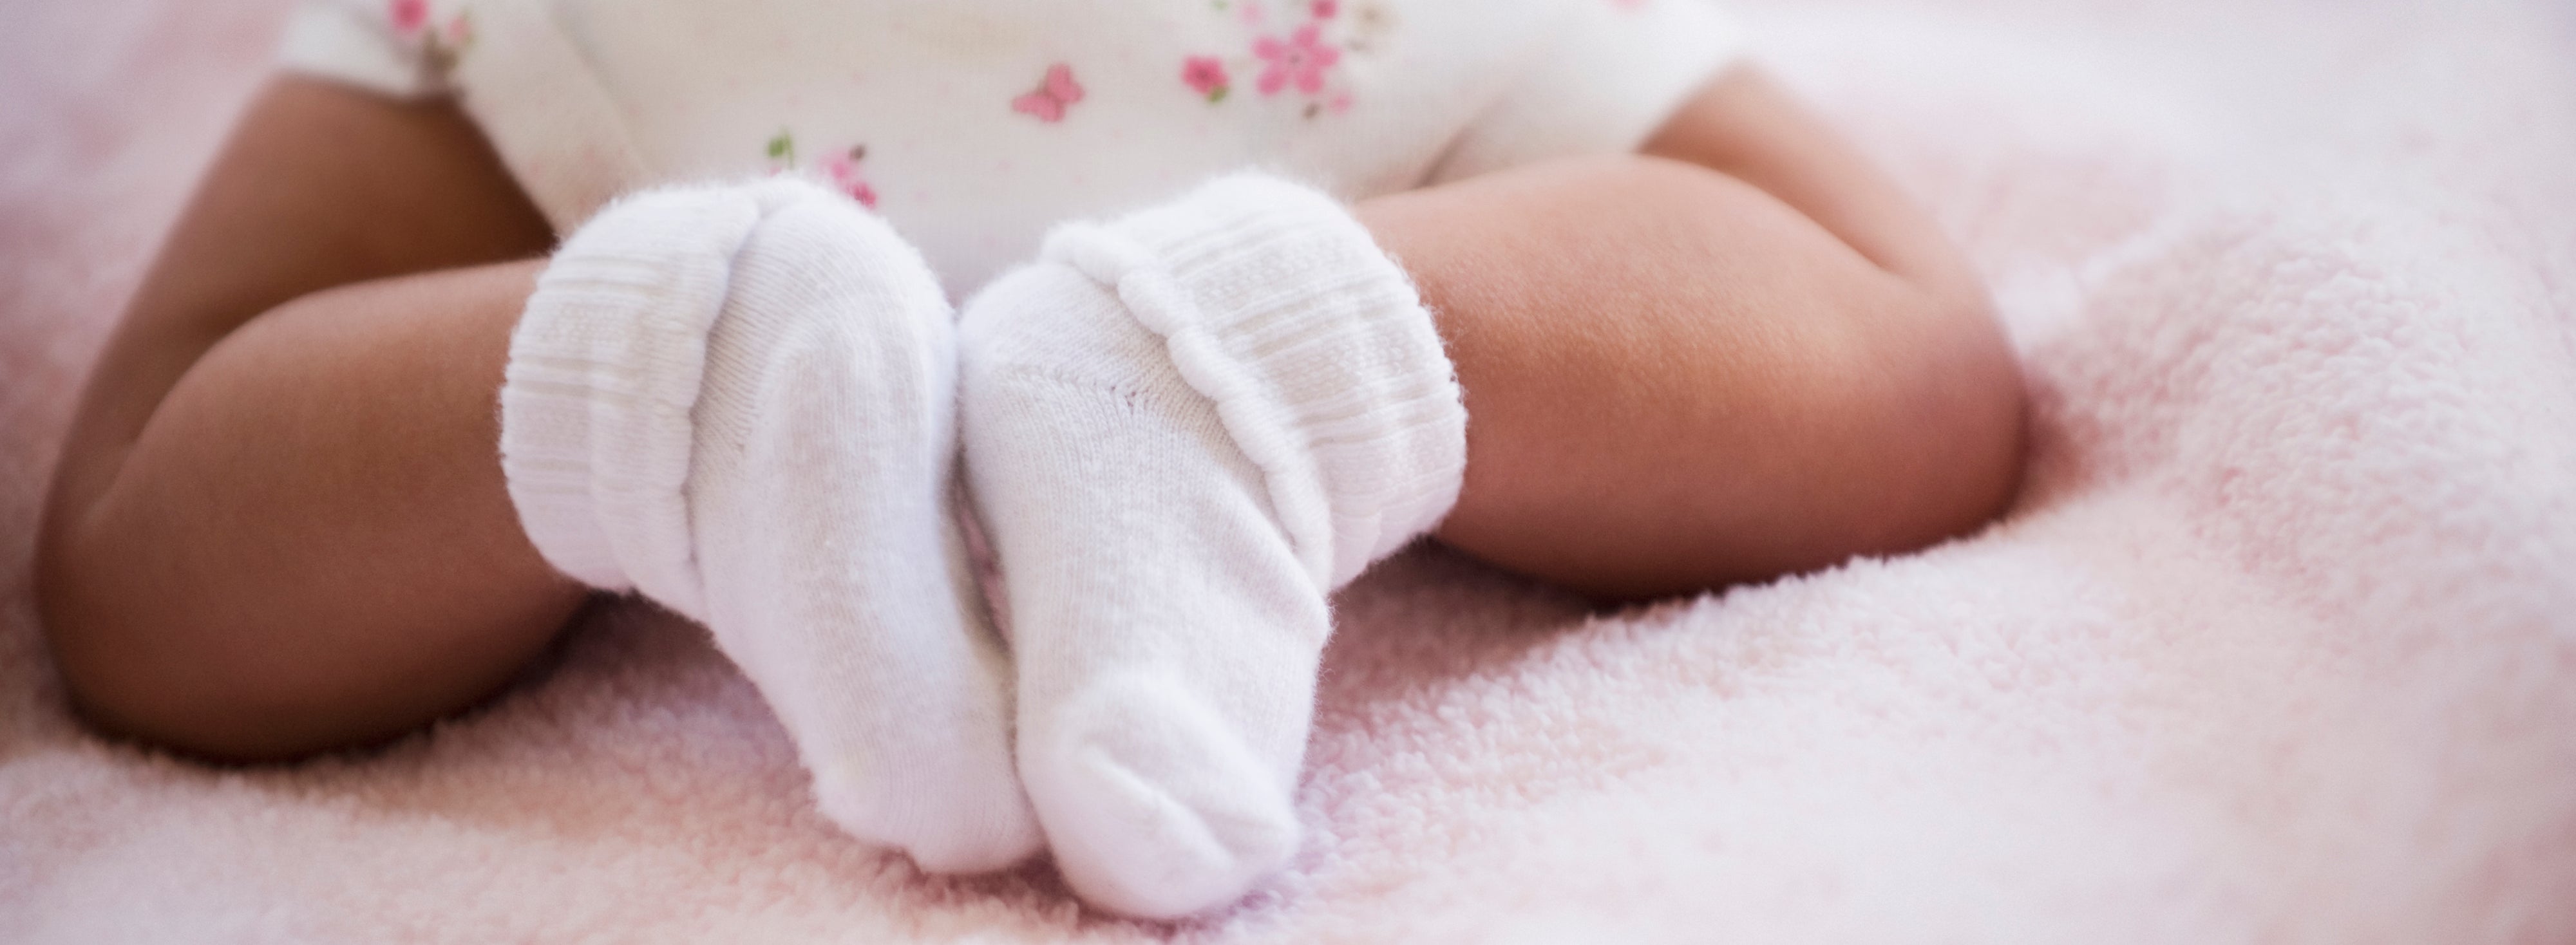 baby wearing socks